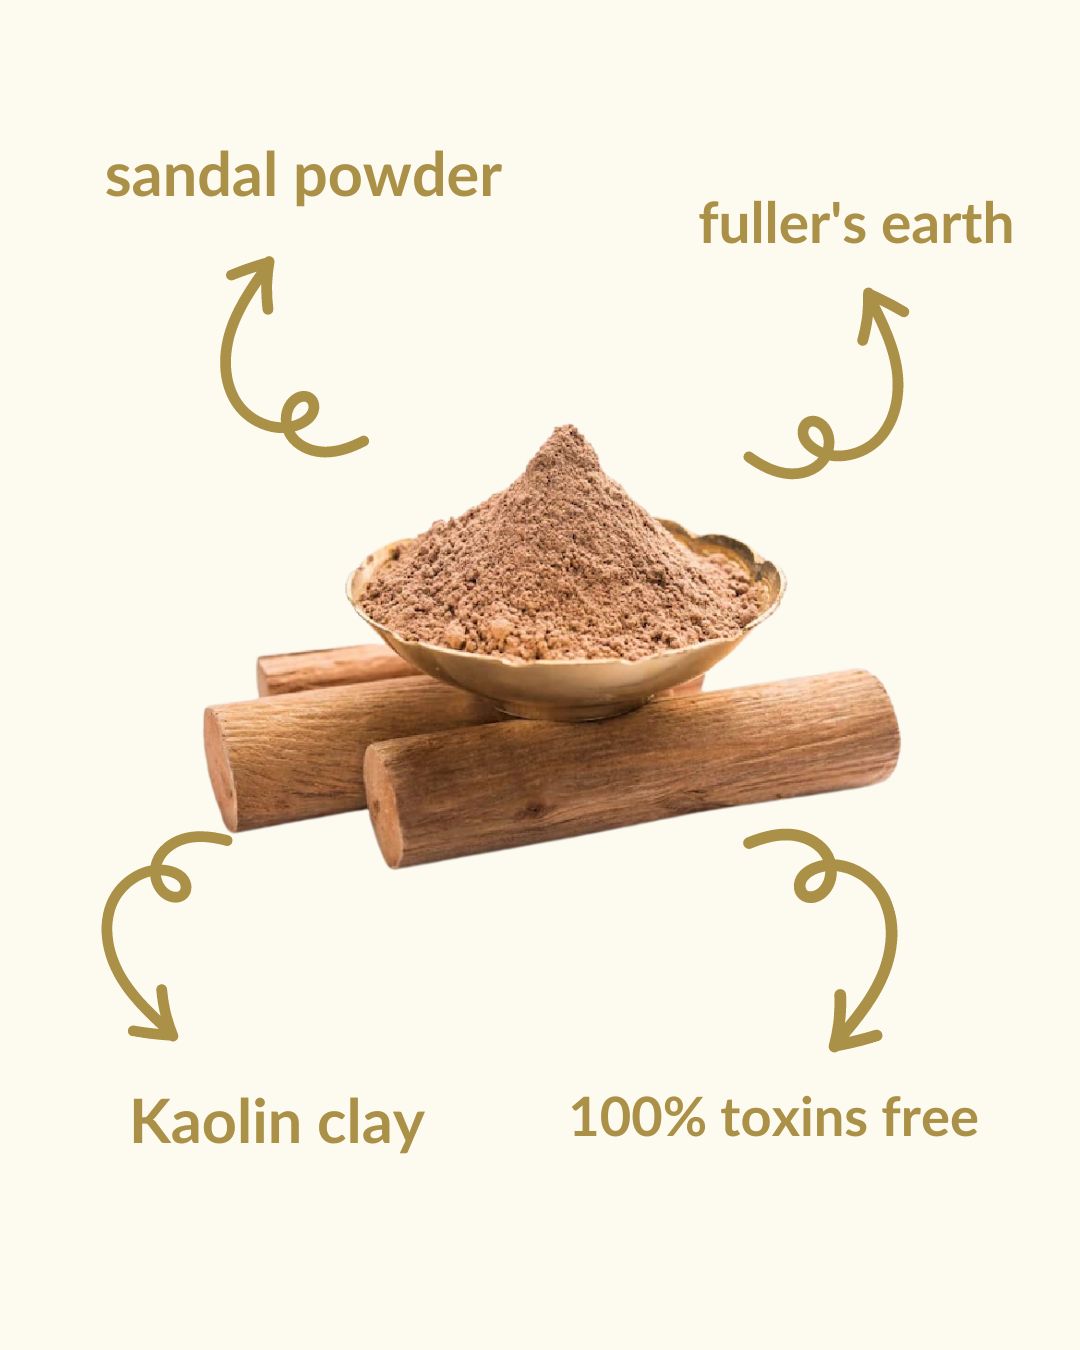 Infographics showing sandal face mask ingredients